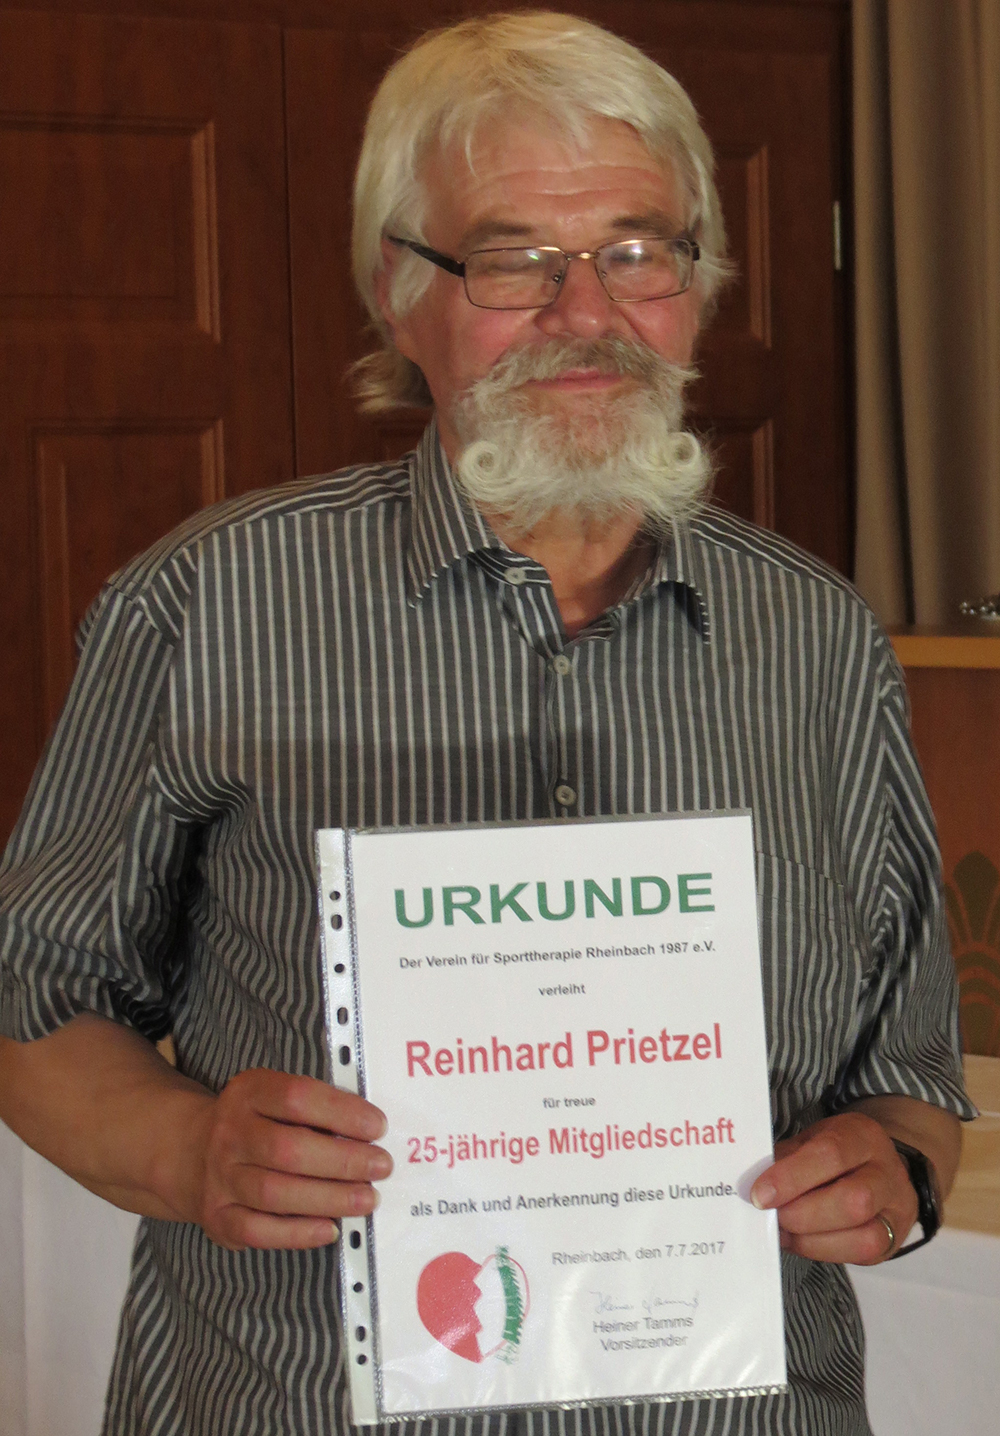 Reinhard Prietzel